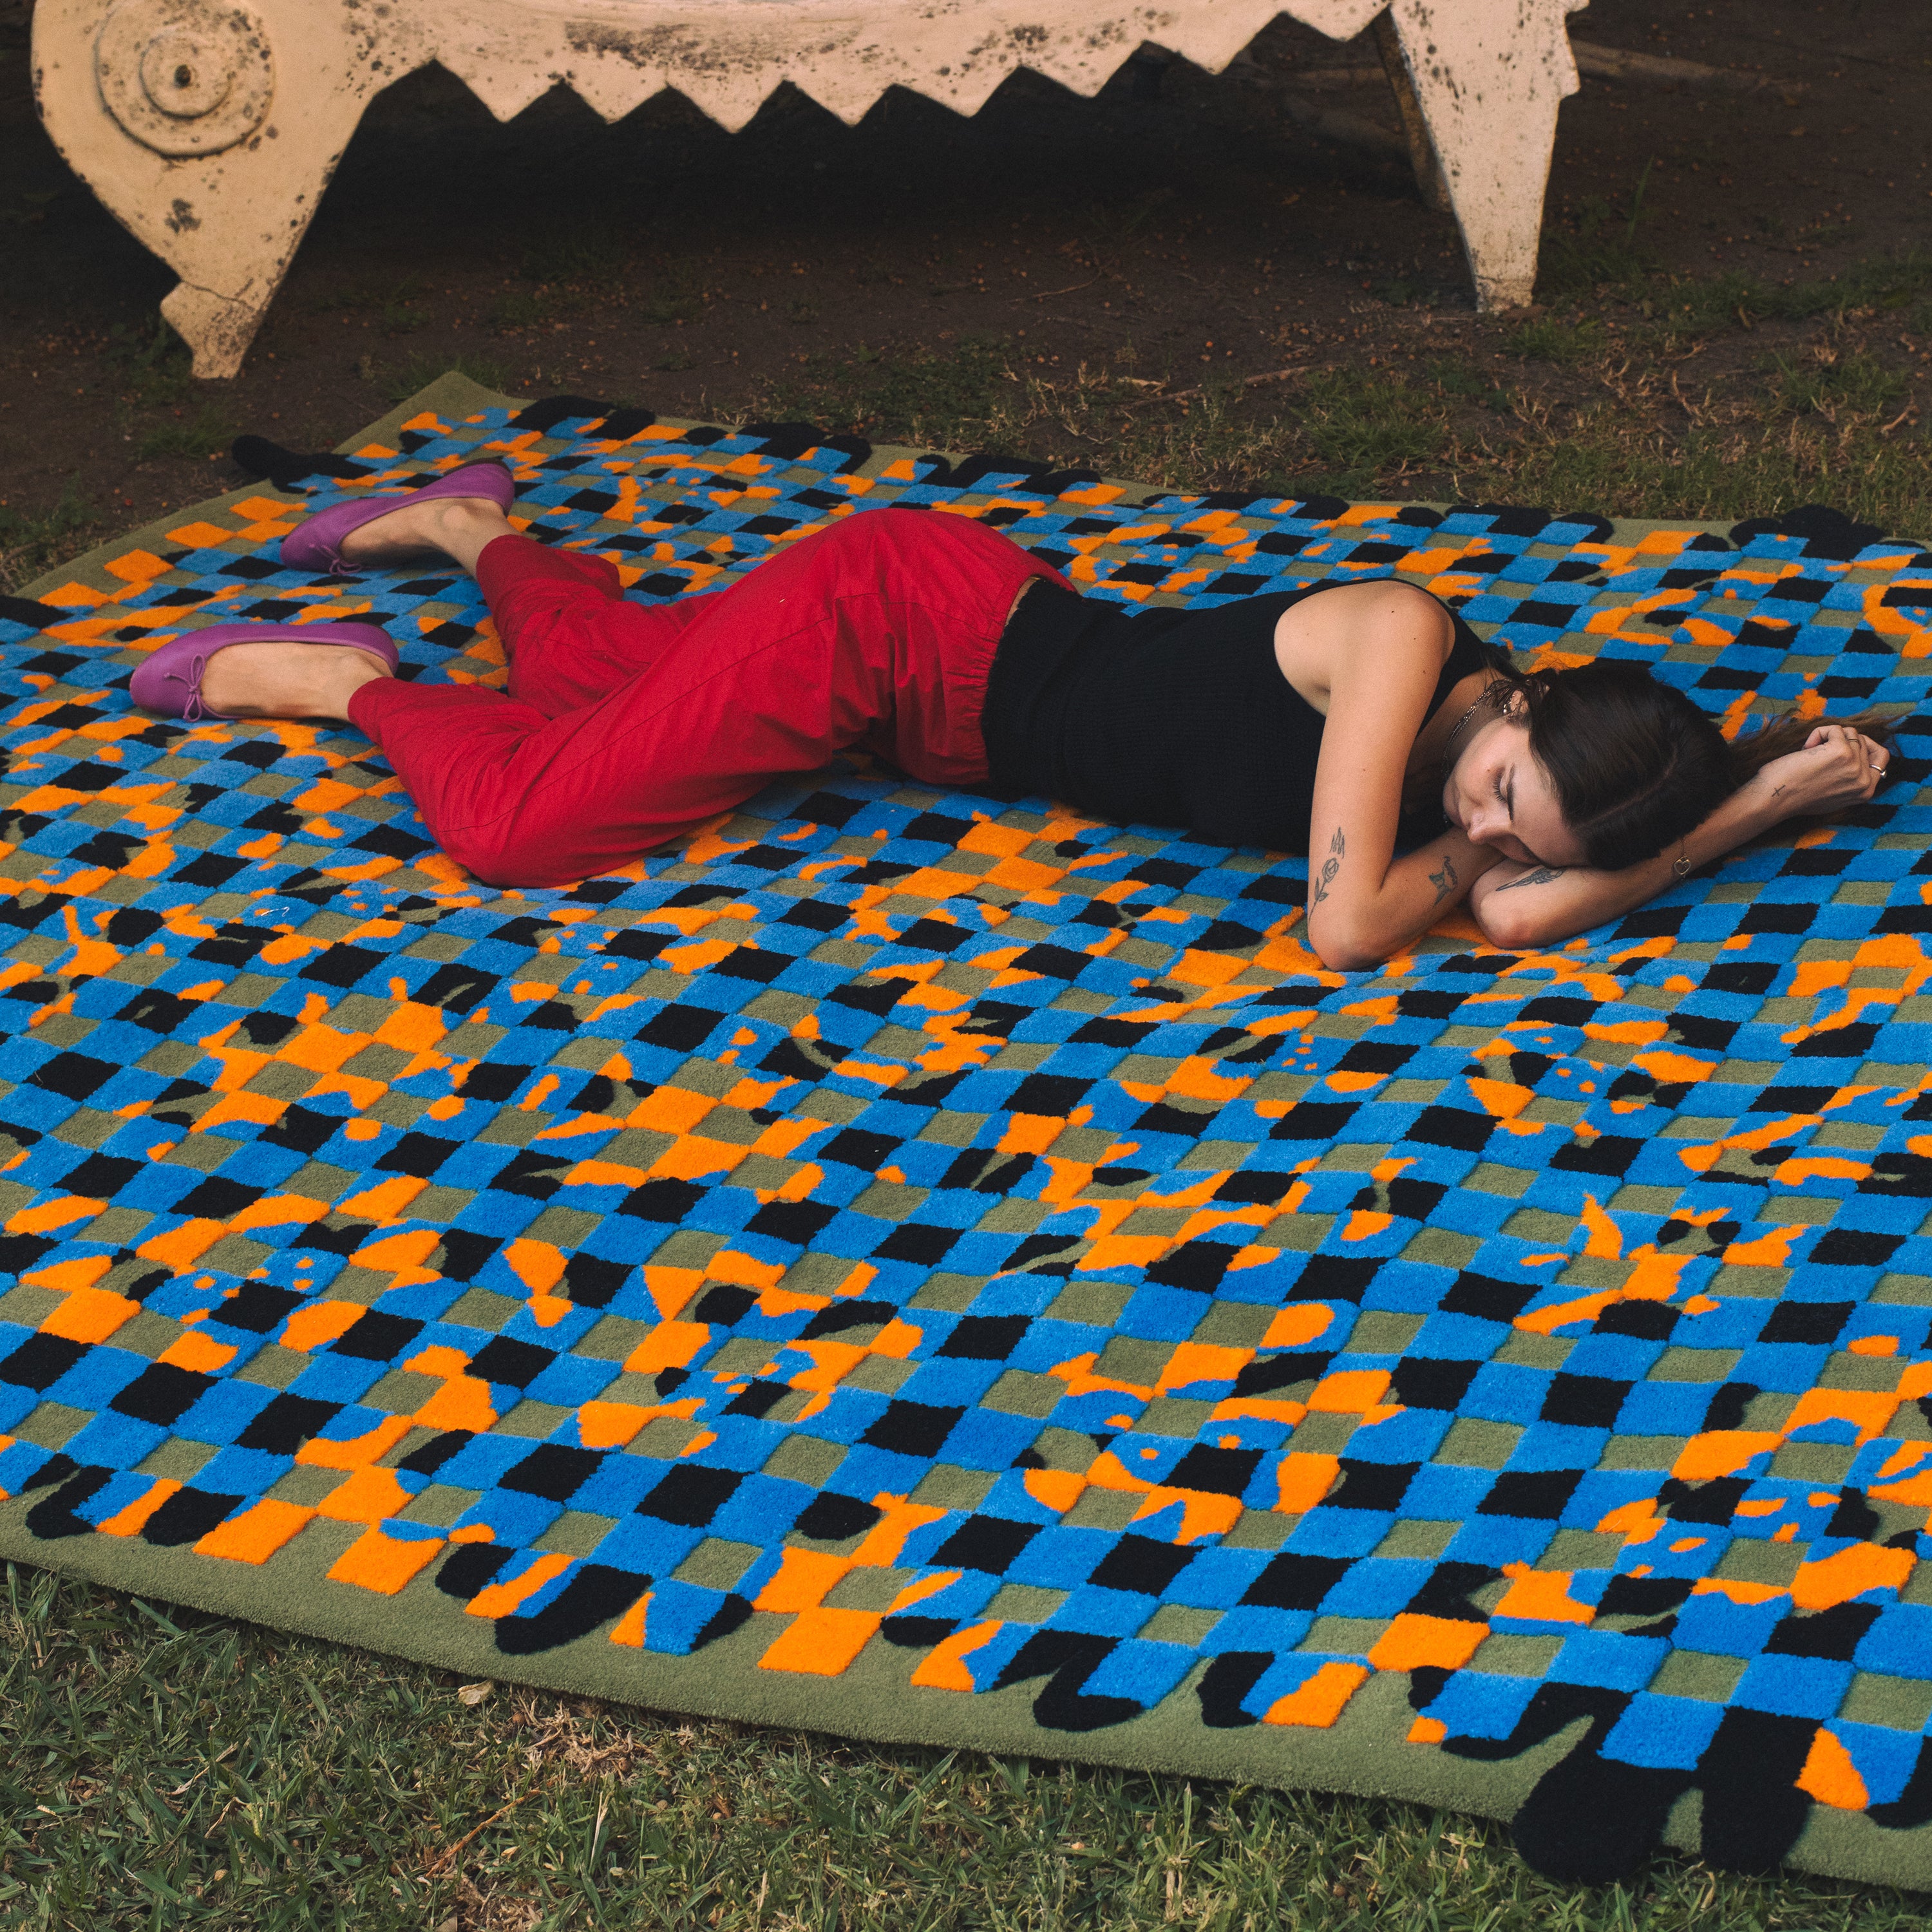 Geometaric flower pattern rug - Blue x Khaki